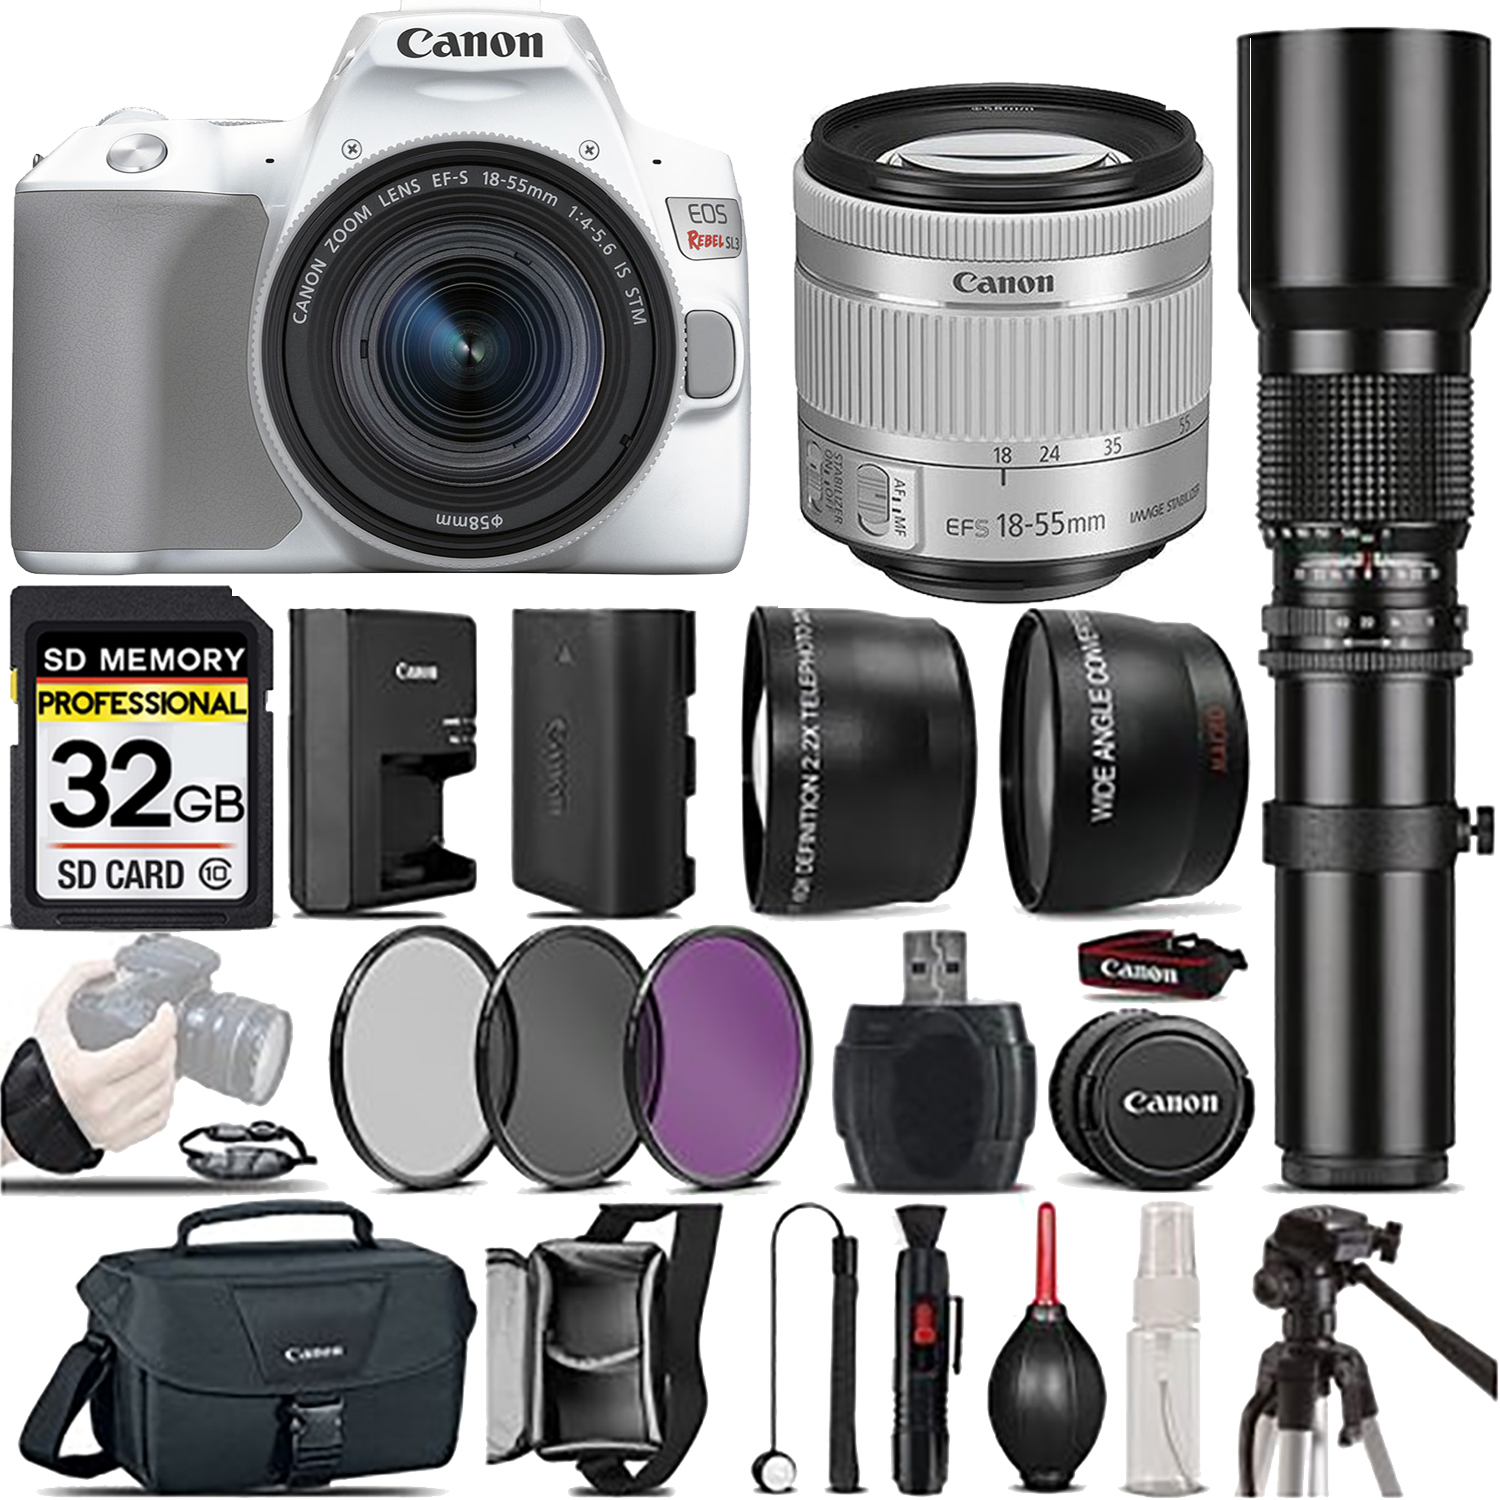 EOS Rebel SL3 DSLR Camera(White) + 18-55mm IS STM + 500mm - Best Value Kit *FREE SHIPPING*